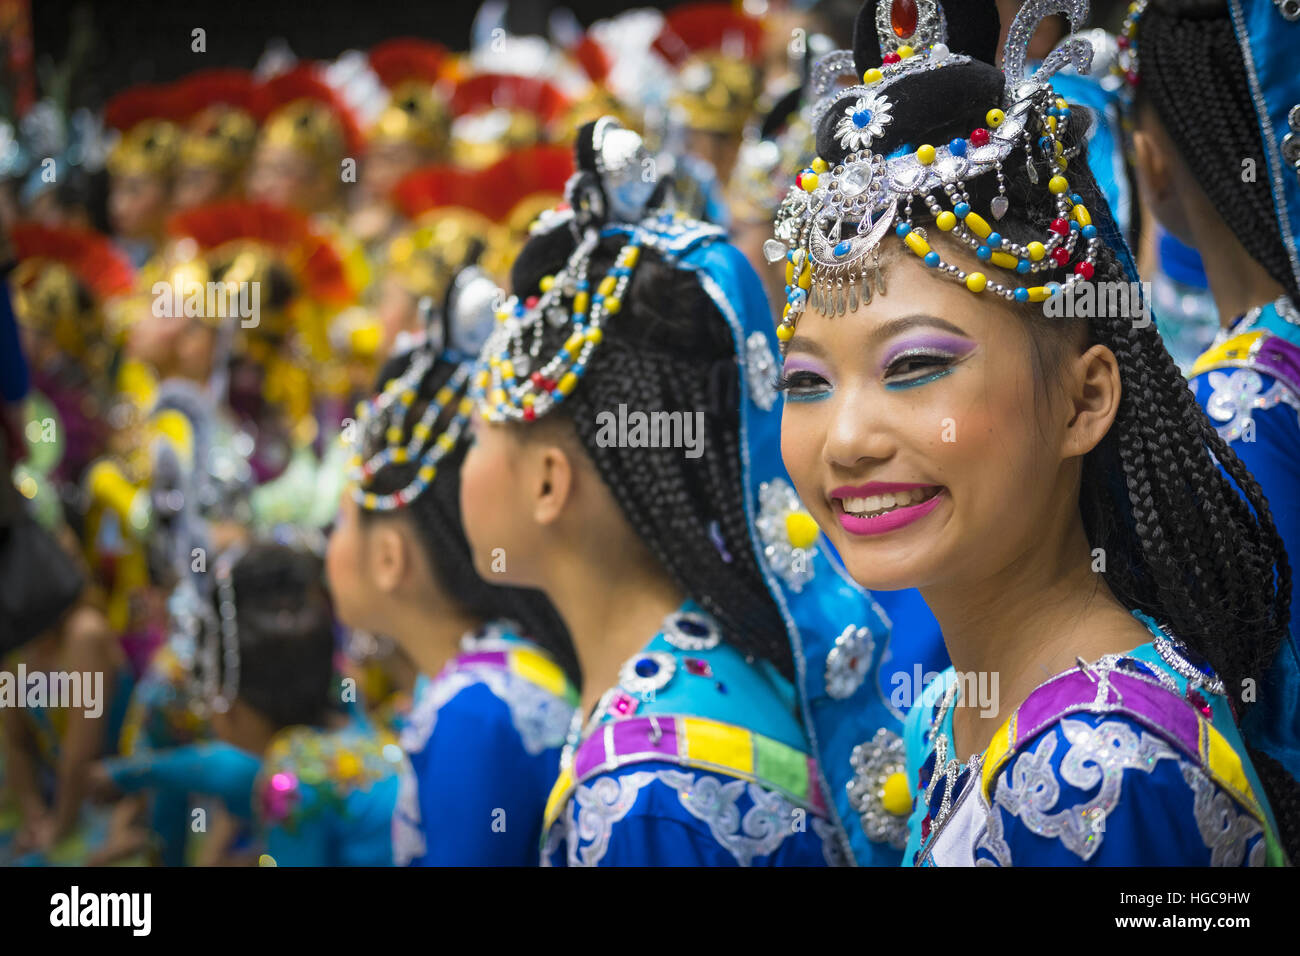 Hmong amerikanischer Neujahrsfest, Hmong ethnischen Traditionen und Kultur zu feiern. St. Paul, Minnesota State Fair Grounds. Stockfoto